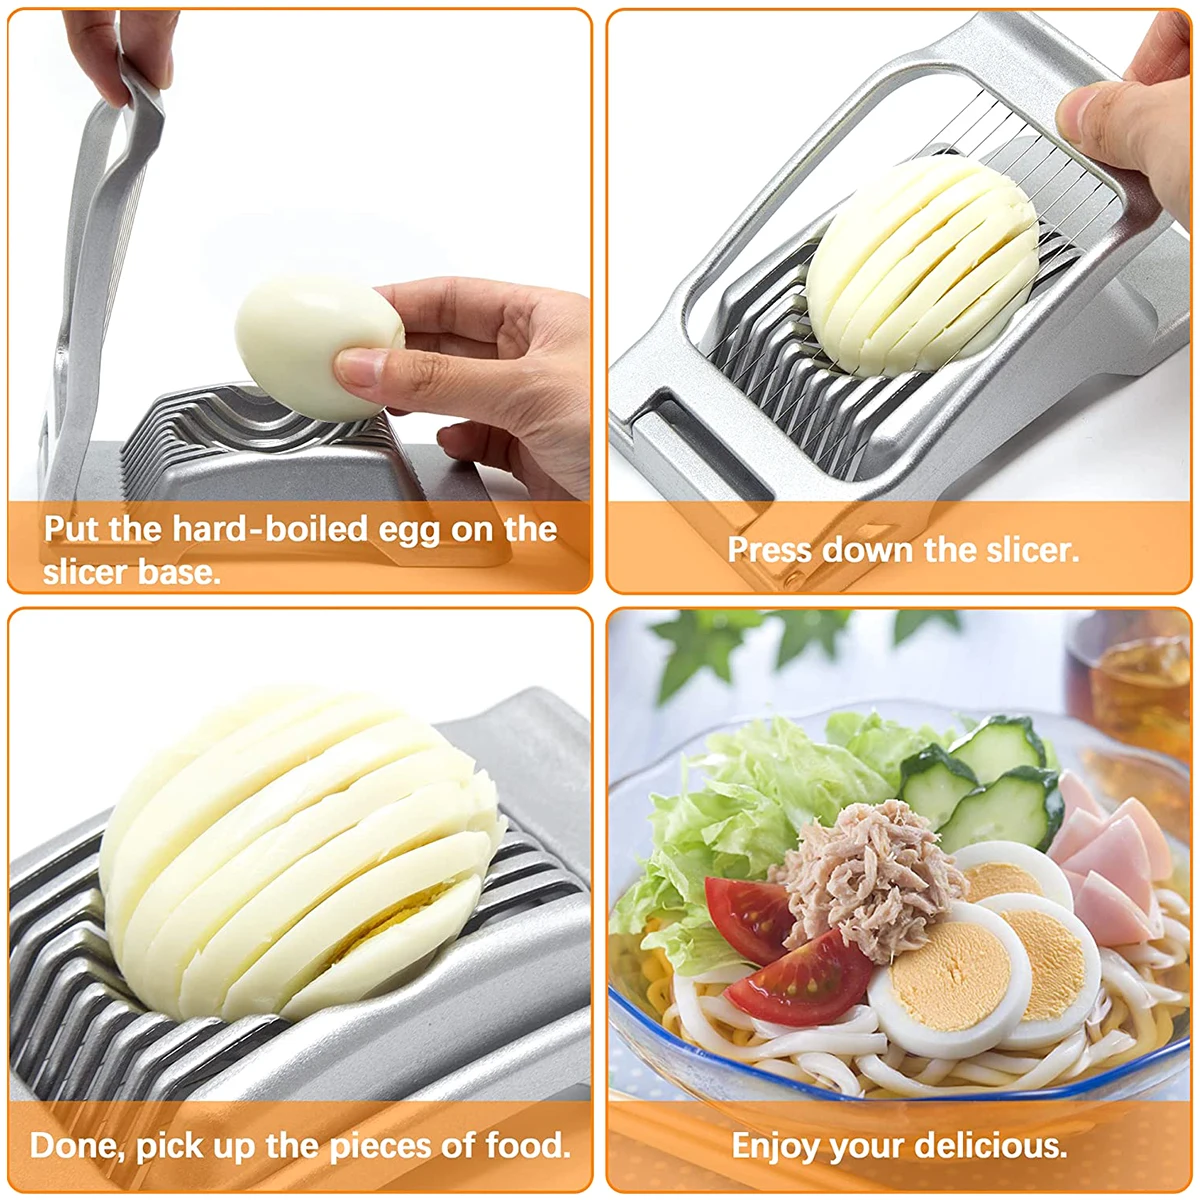 https://ae01.alicdn.com/kf/S7bbeb2cdb9834560b40a58cdec7f377eL/Egg-Slicer-Heavy-Duty-Aluminum-Alloy-Egg-Slicer-Multifunctional-Manual-Egg-Slicer-Home-Kitchen-Mini-Manual.jpg